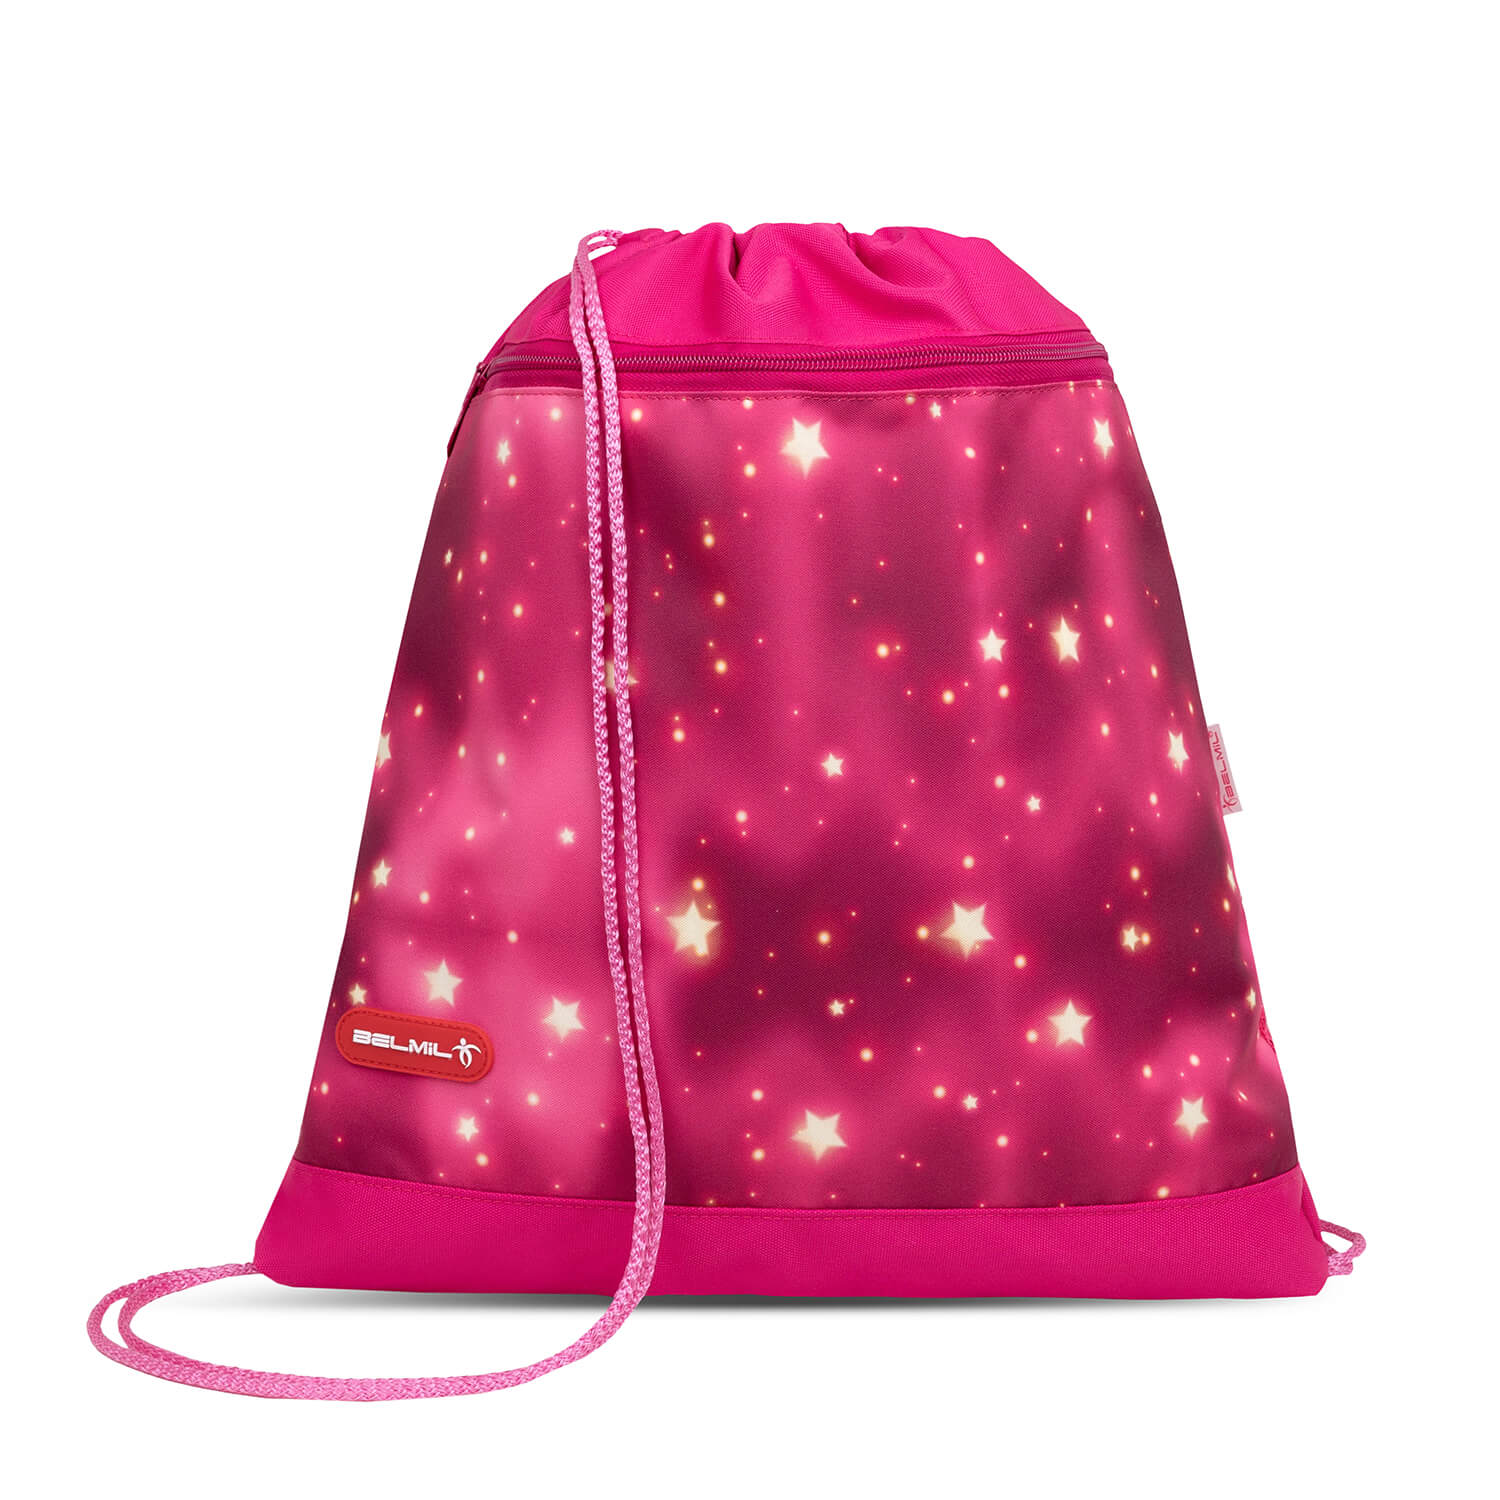 Classy Plus Pink Star schoolbag set 5 pcs